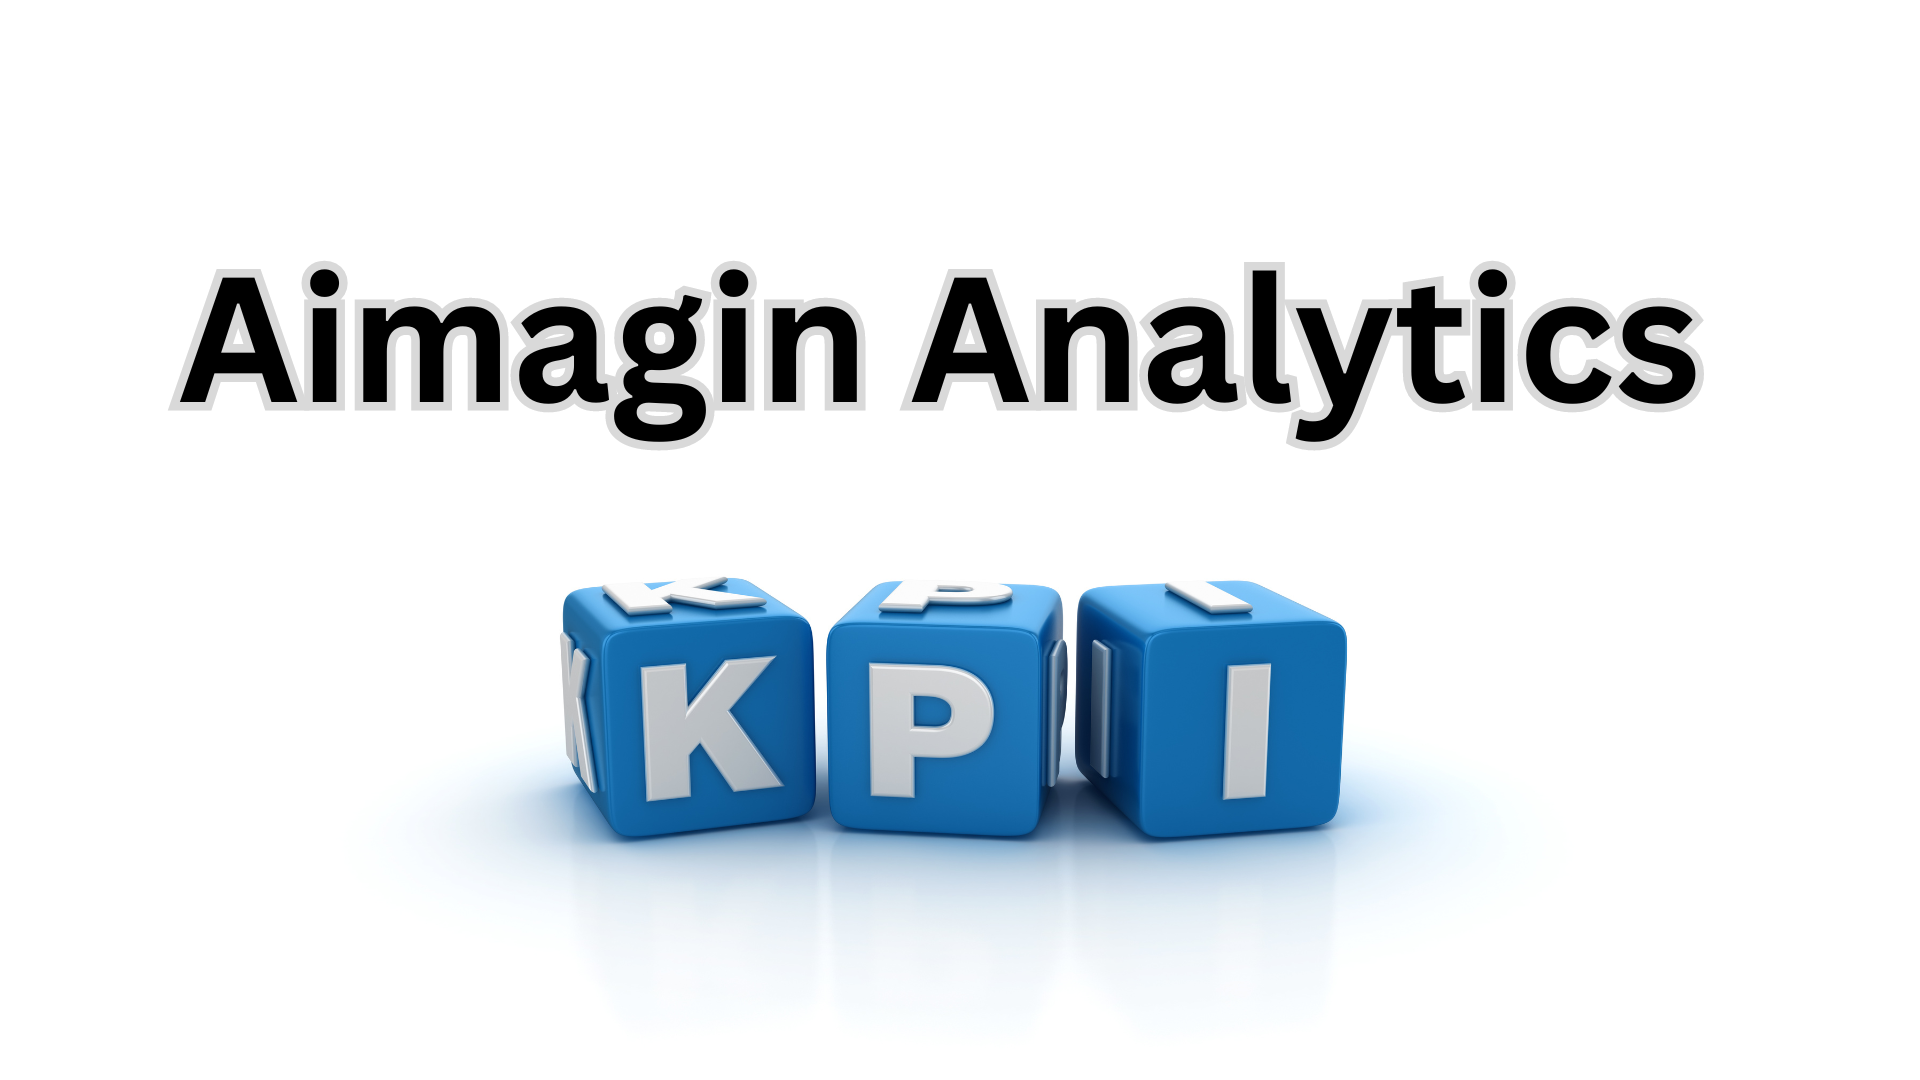 Aimagin Analytics KPI - แนะนำระบบติดตามและประเมินตัวชี้วัด (KPI) 